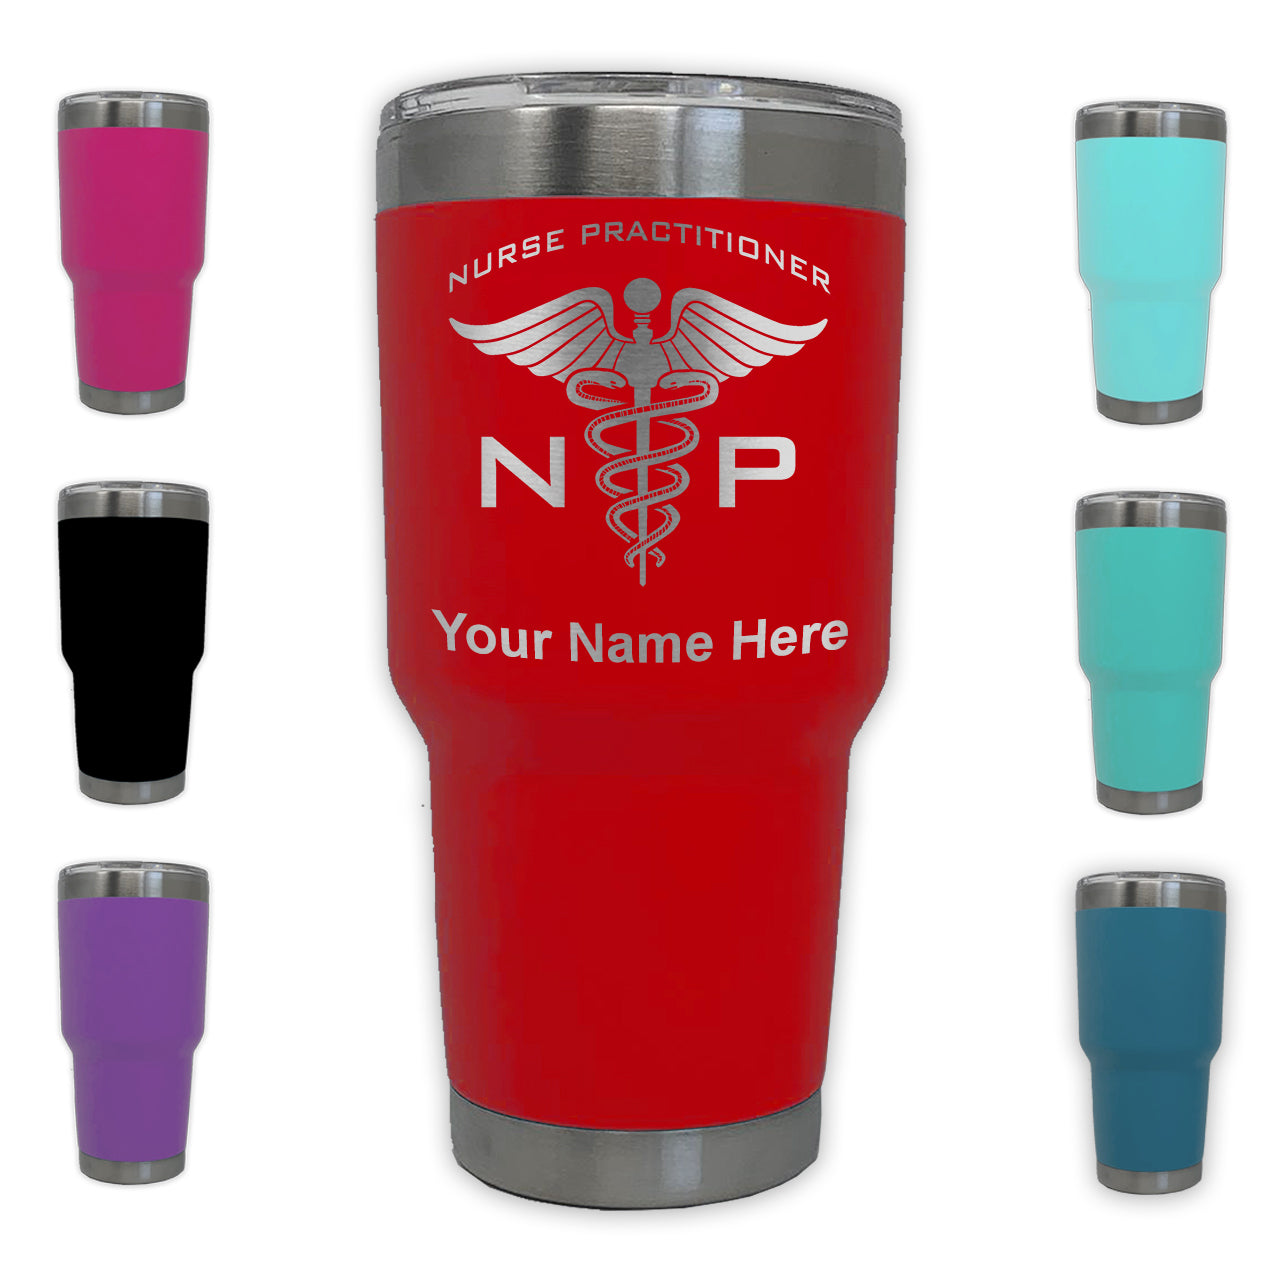 LaserGram 30oz Tumbler Mug, NP Nurse Practitioner, Personalized Engraving Included